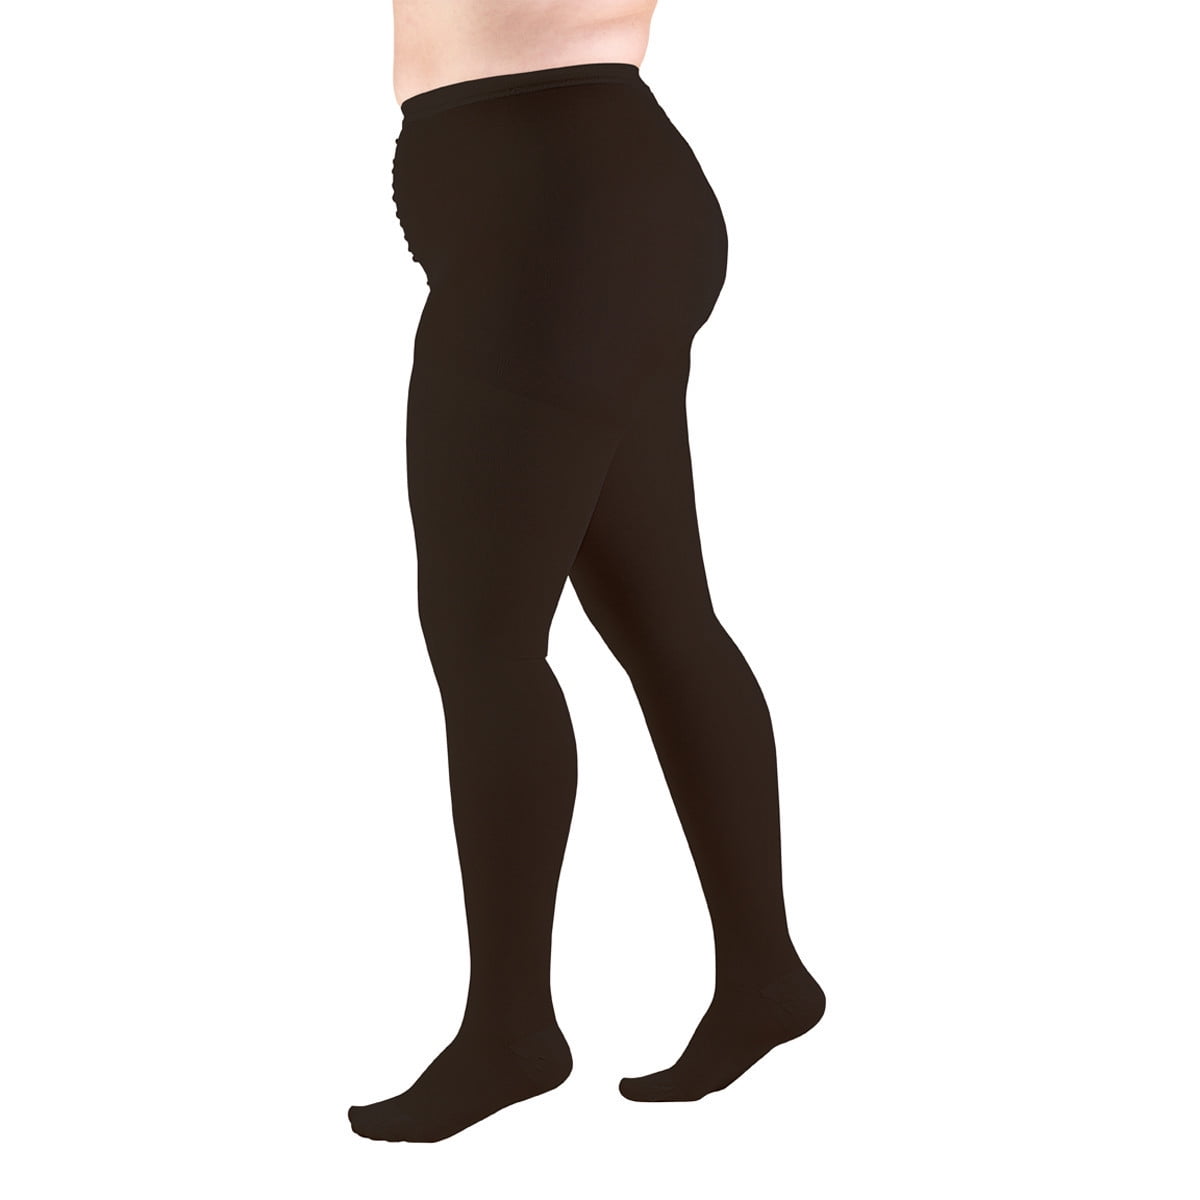 Truform Pantyhose Plus Size Full Figure Mmhg Black Medium